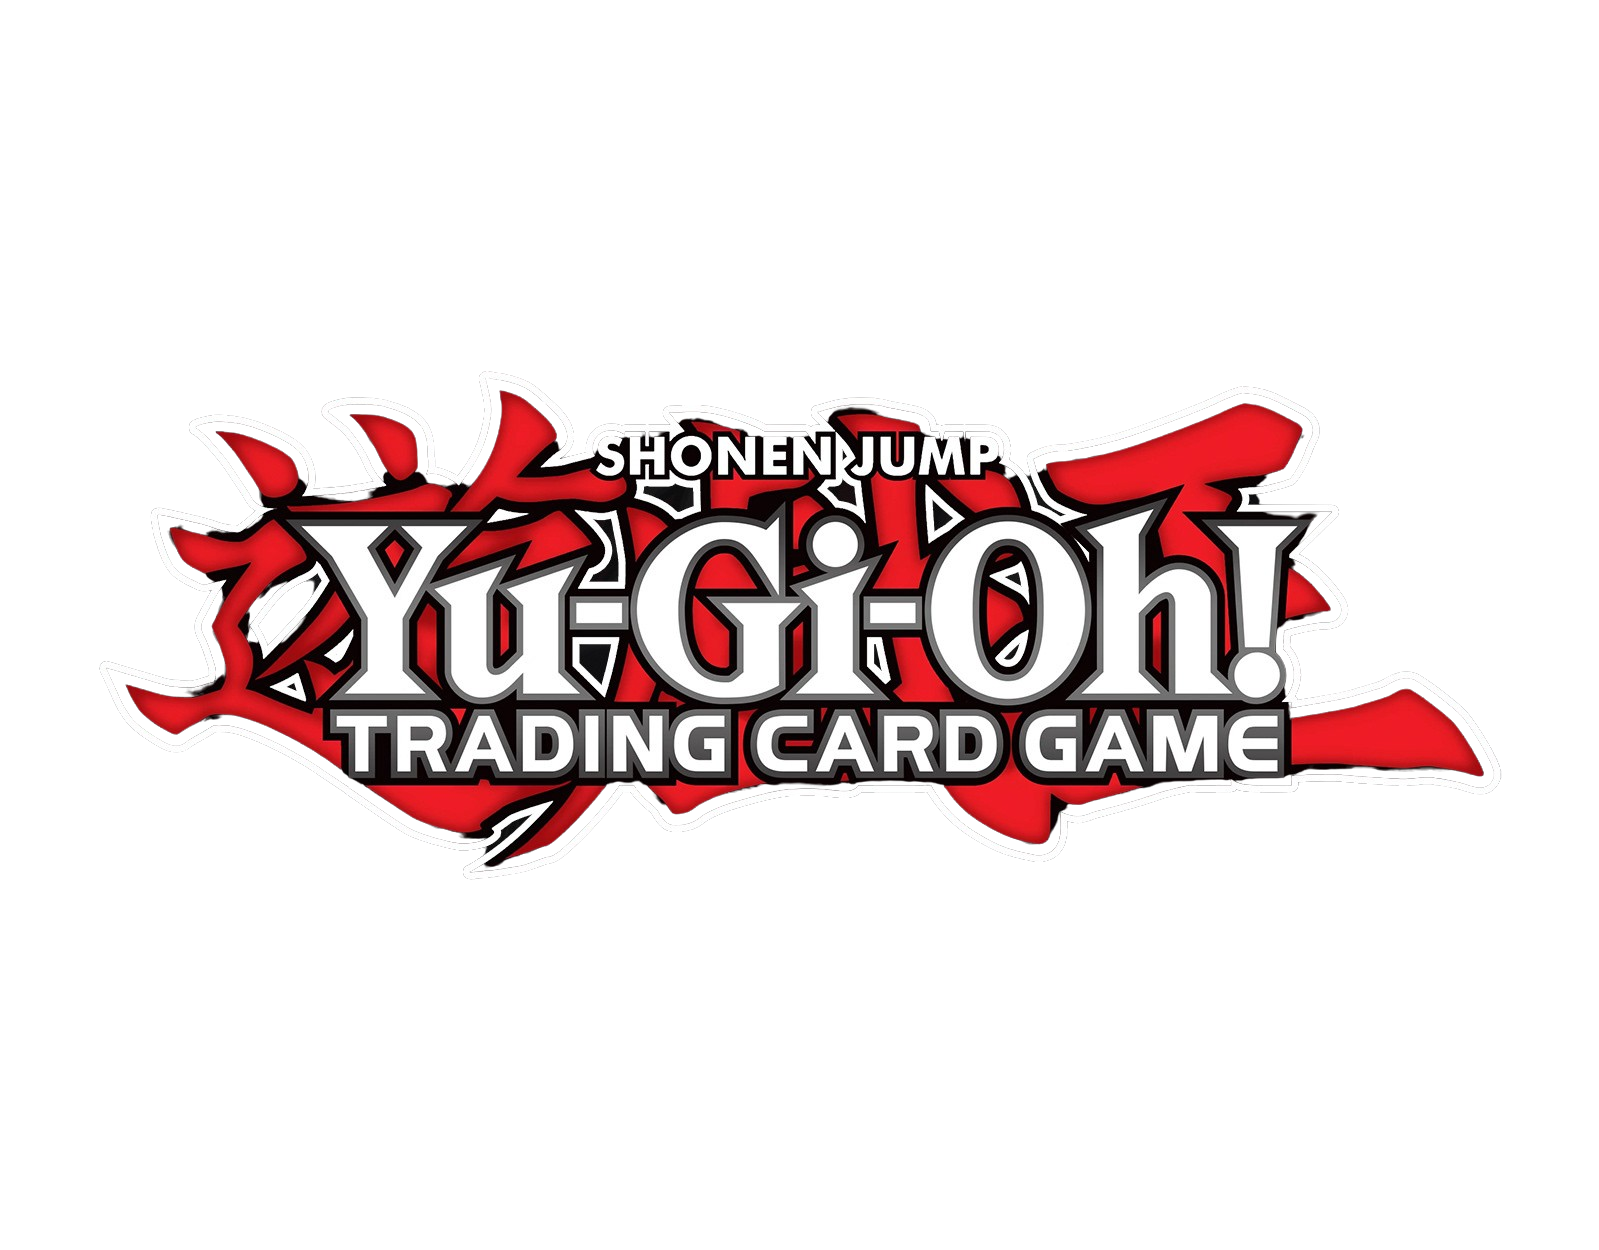 Yu-Gi-Oh! - 25th Anniversary - Dueling Mirrors Tin